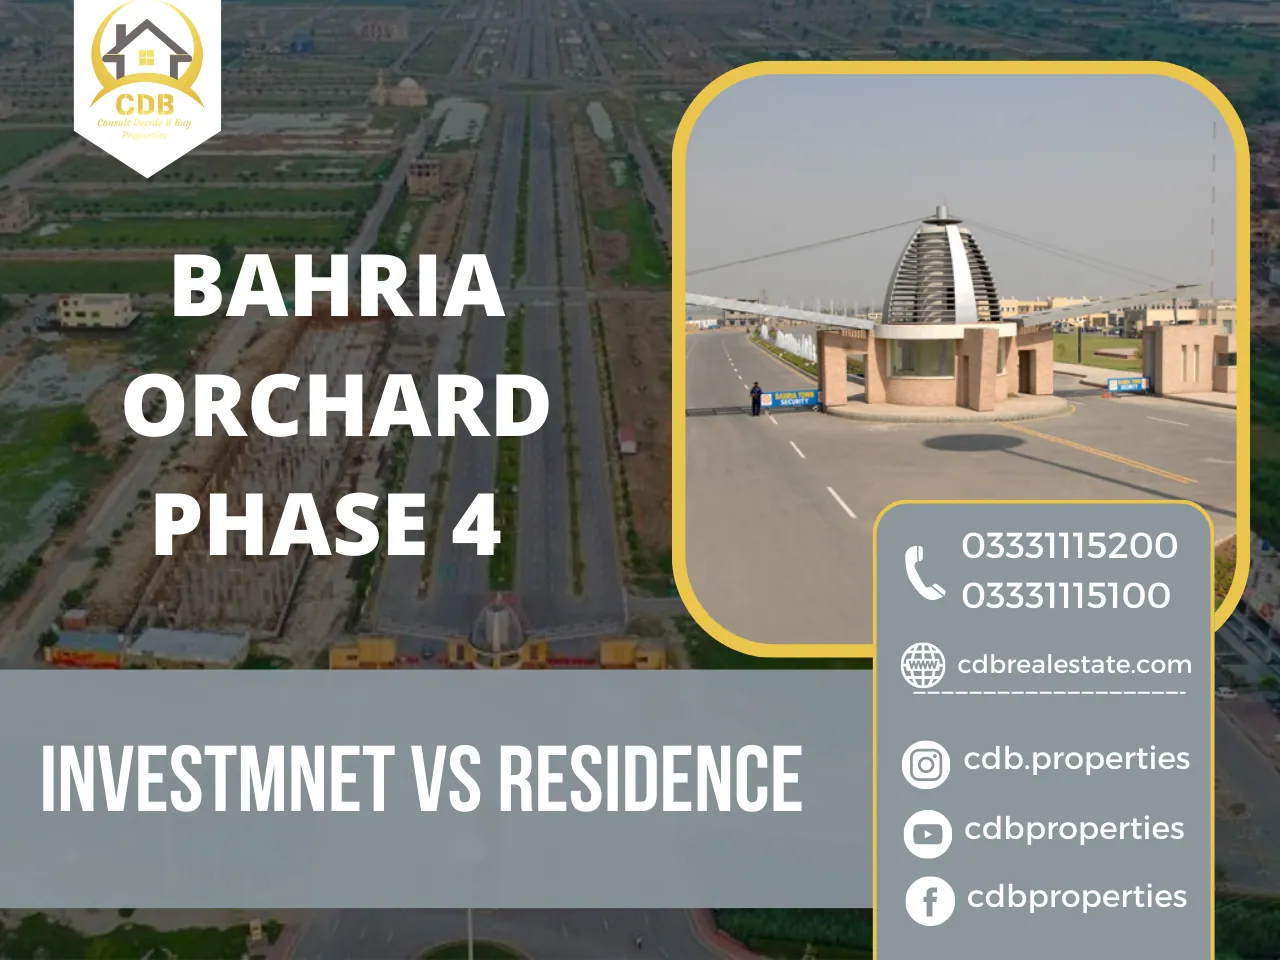 Bahria Orchard Phase 4 Investment vs residence